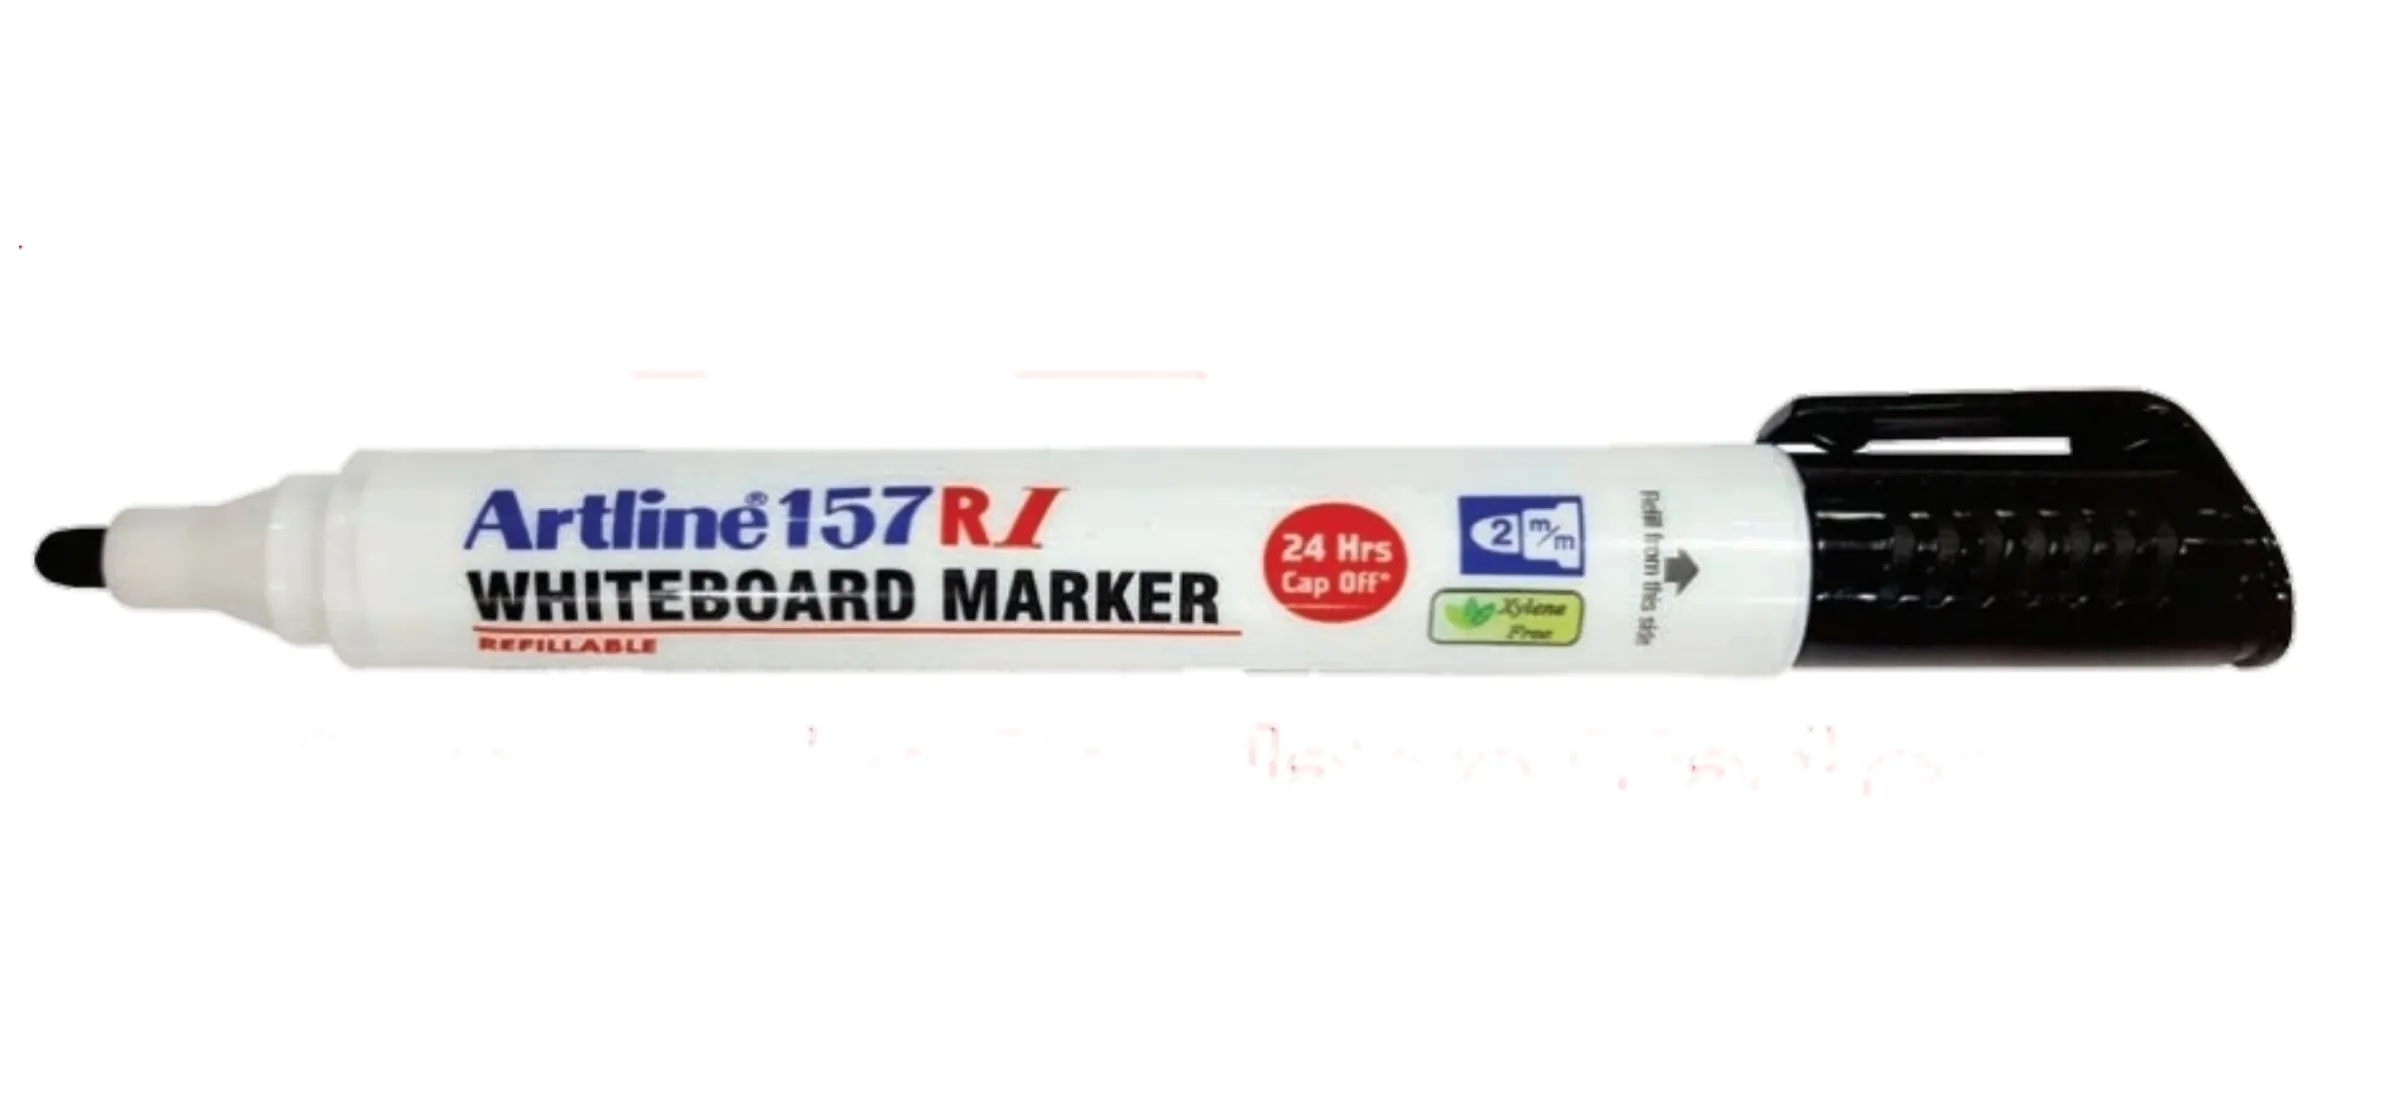 Artline White Board Marker 157 RI Refillable Black Colour Pack of 1 Marker